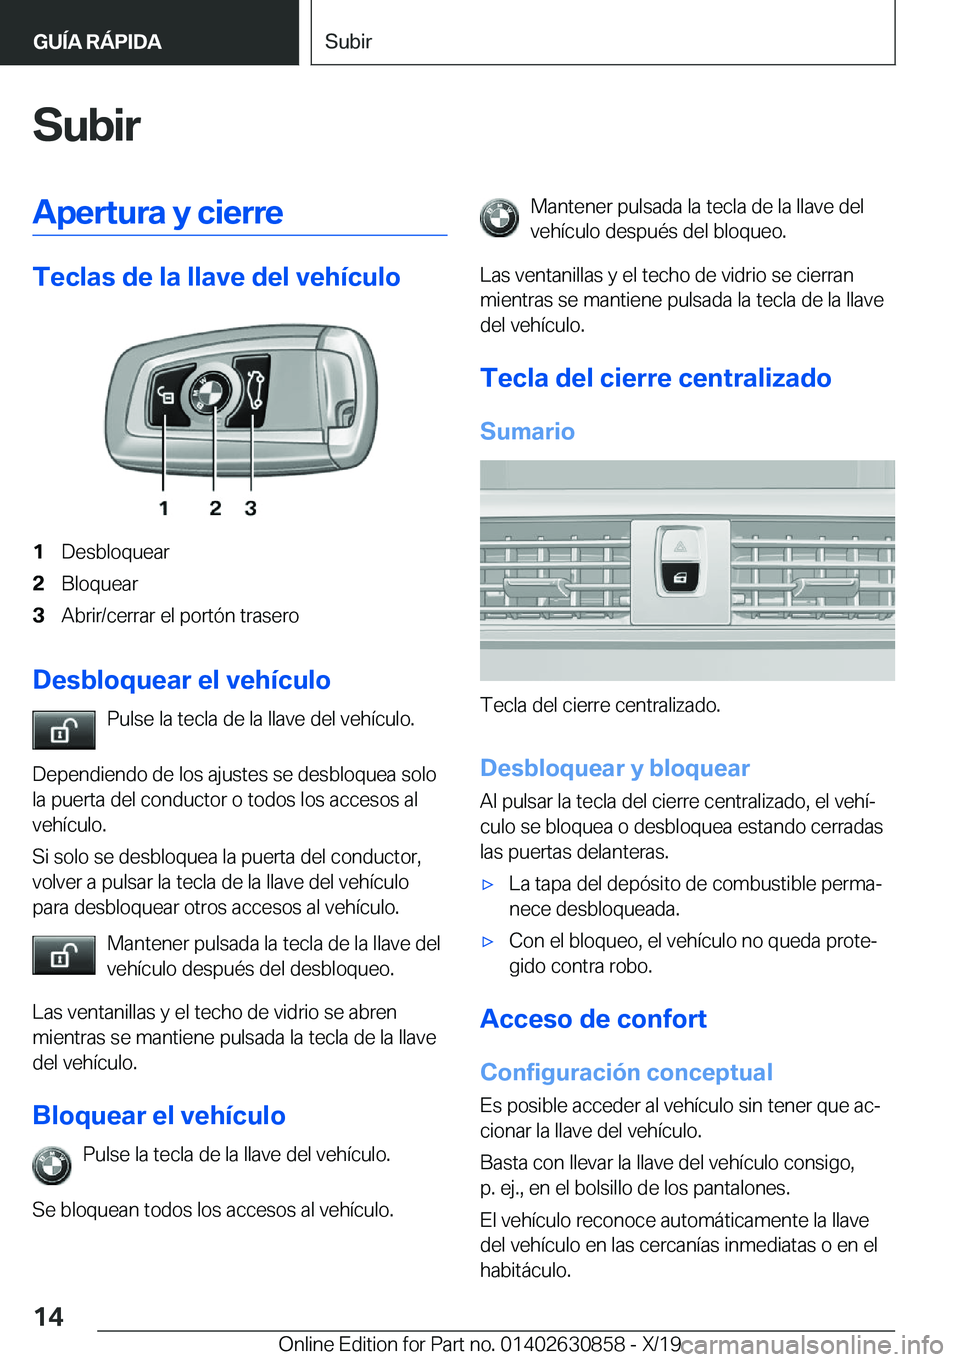 BMW 4 SERIES GRAN COUPE 2020  Manuales de Empleo (in Spanish) �S�u�b�i�r�A�p�e�r�t�u�r�a��y��c�i�e�r�r�e
�T�e�c�l�a�s��d�e��l�a��l�l�a�v�e��d�e�l��v�e�h�